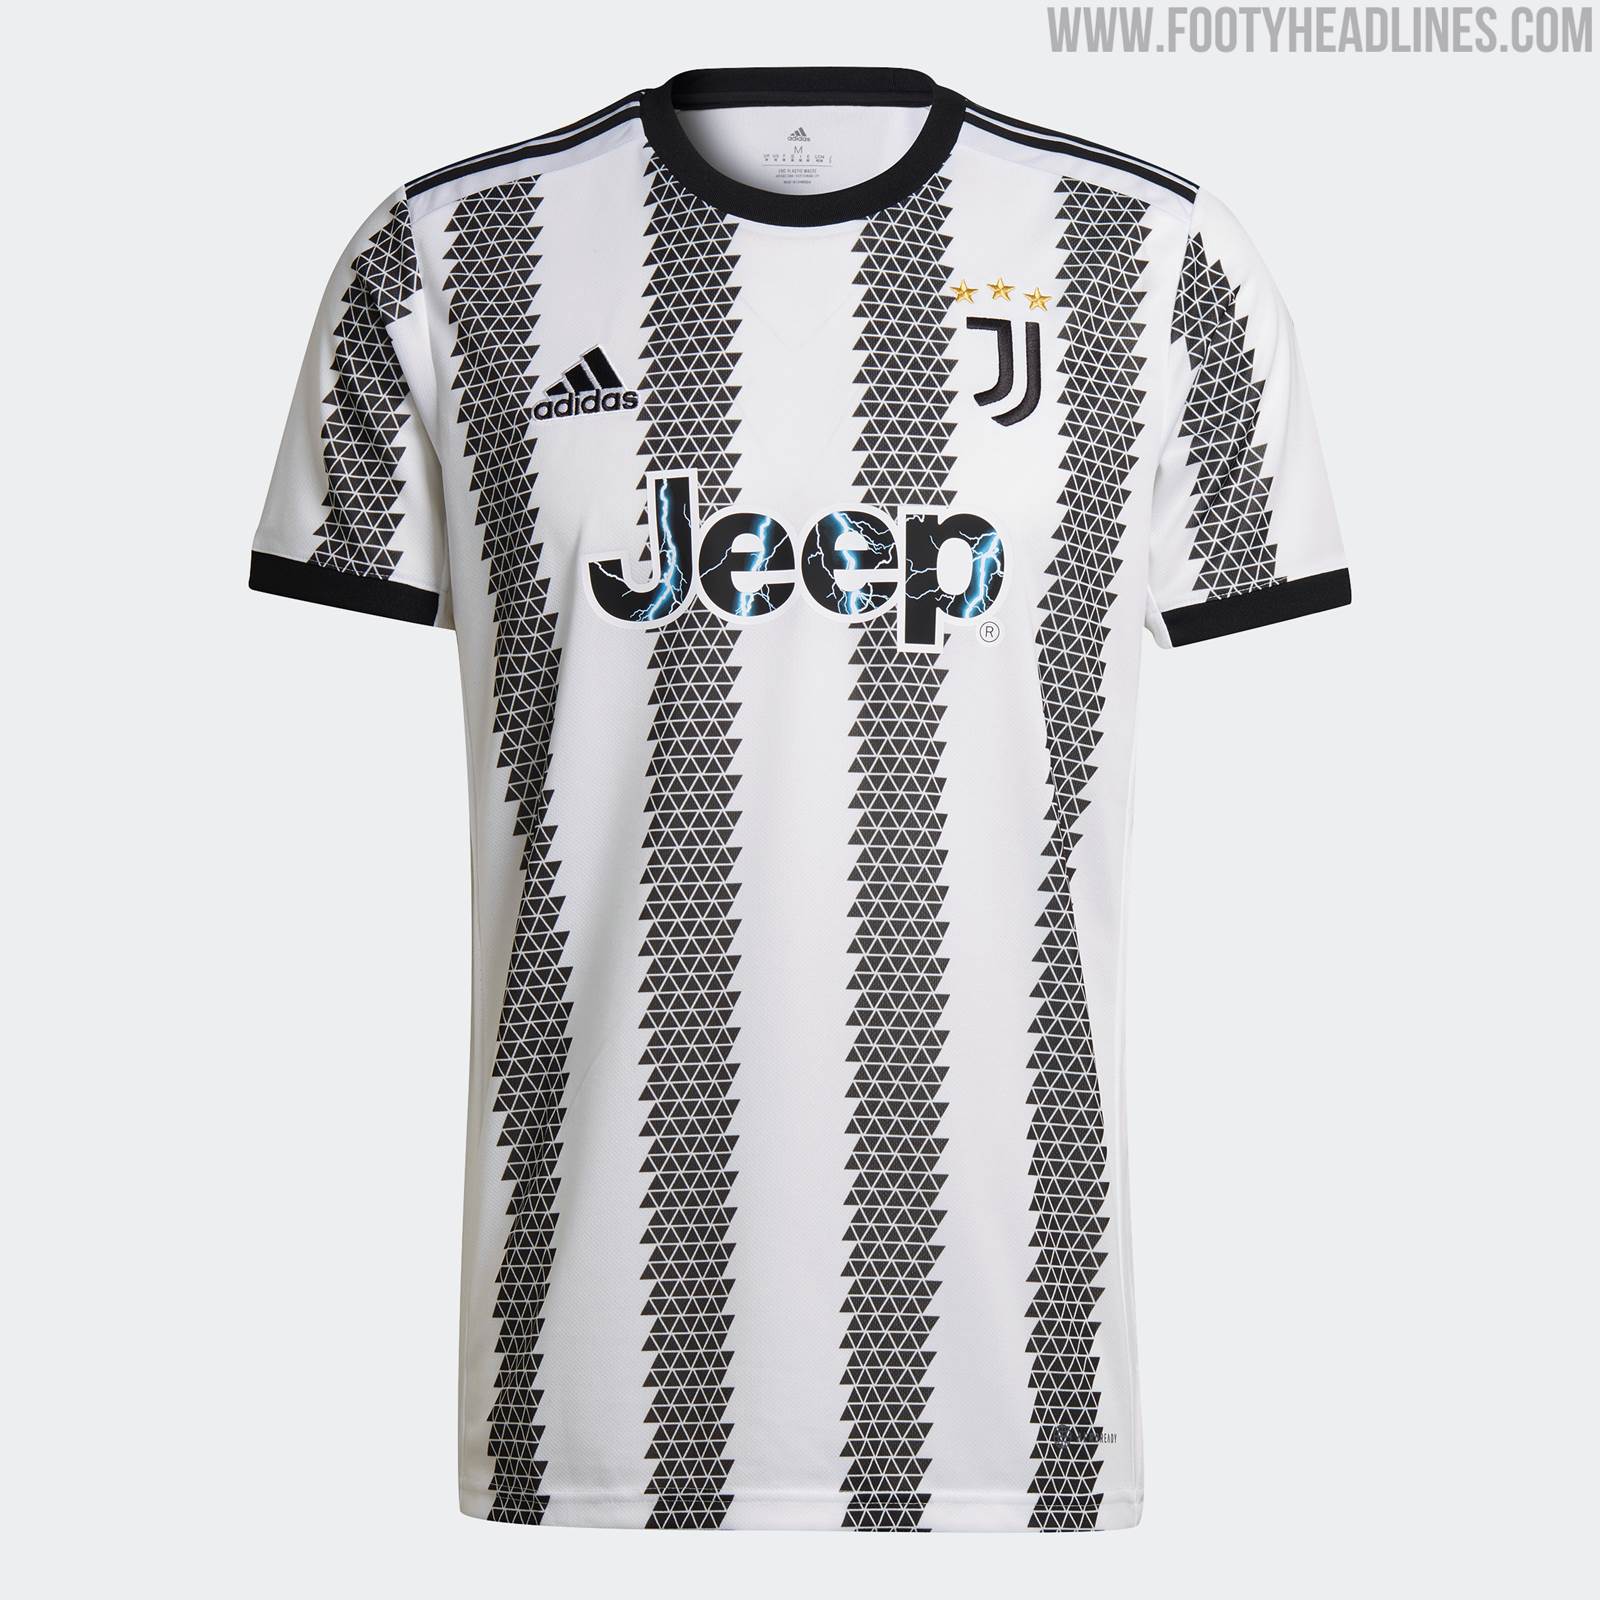 Juventus 22-23 Kit Footy Headlines